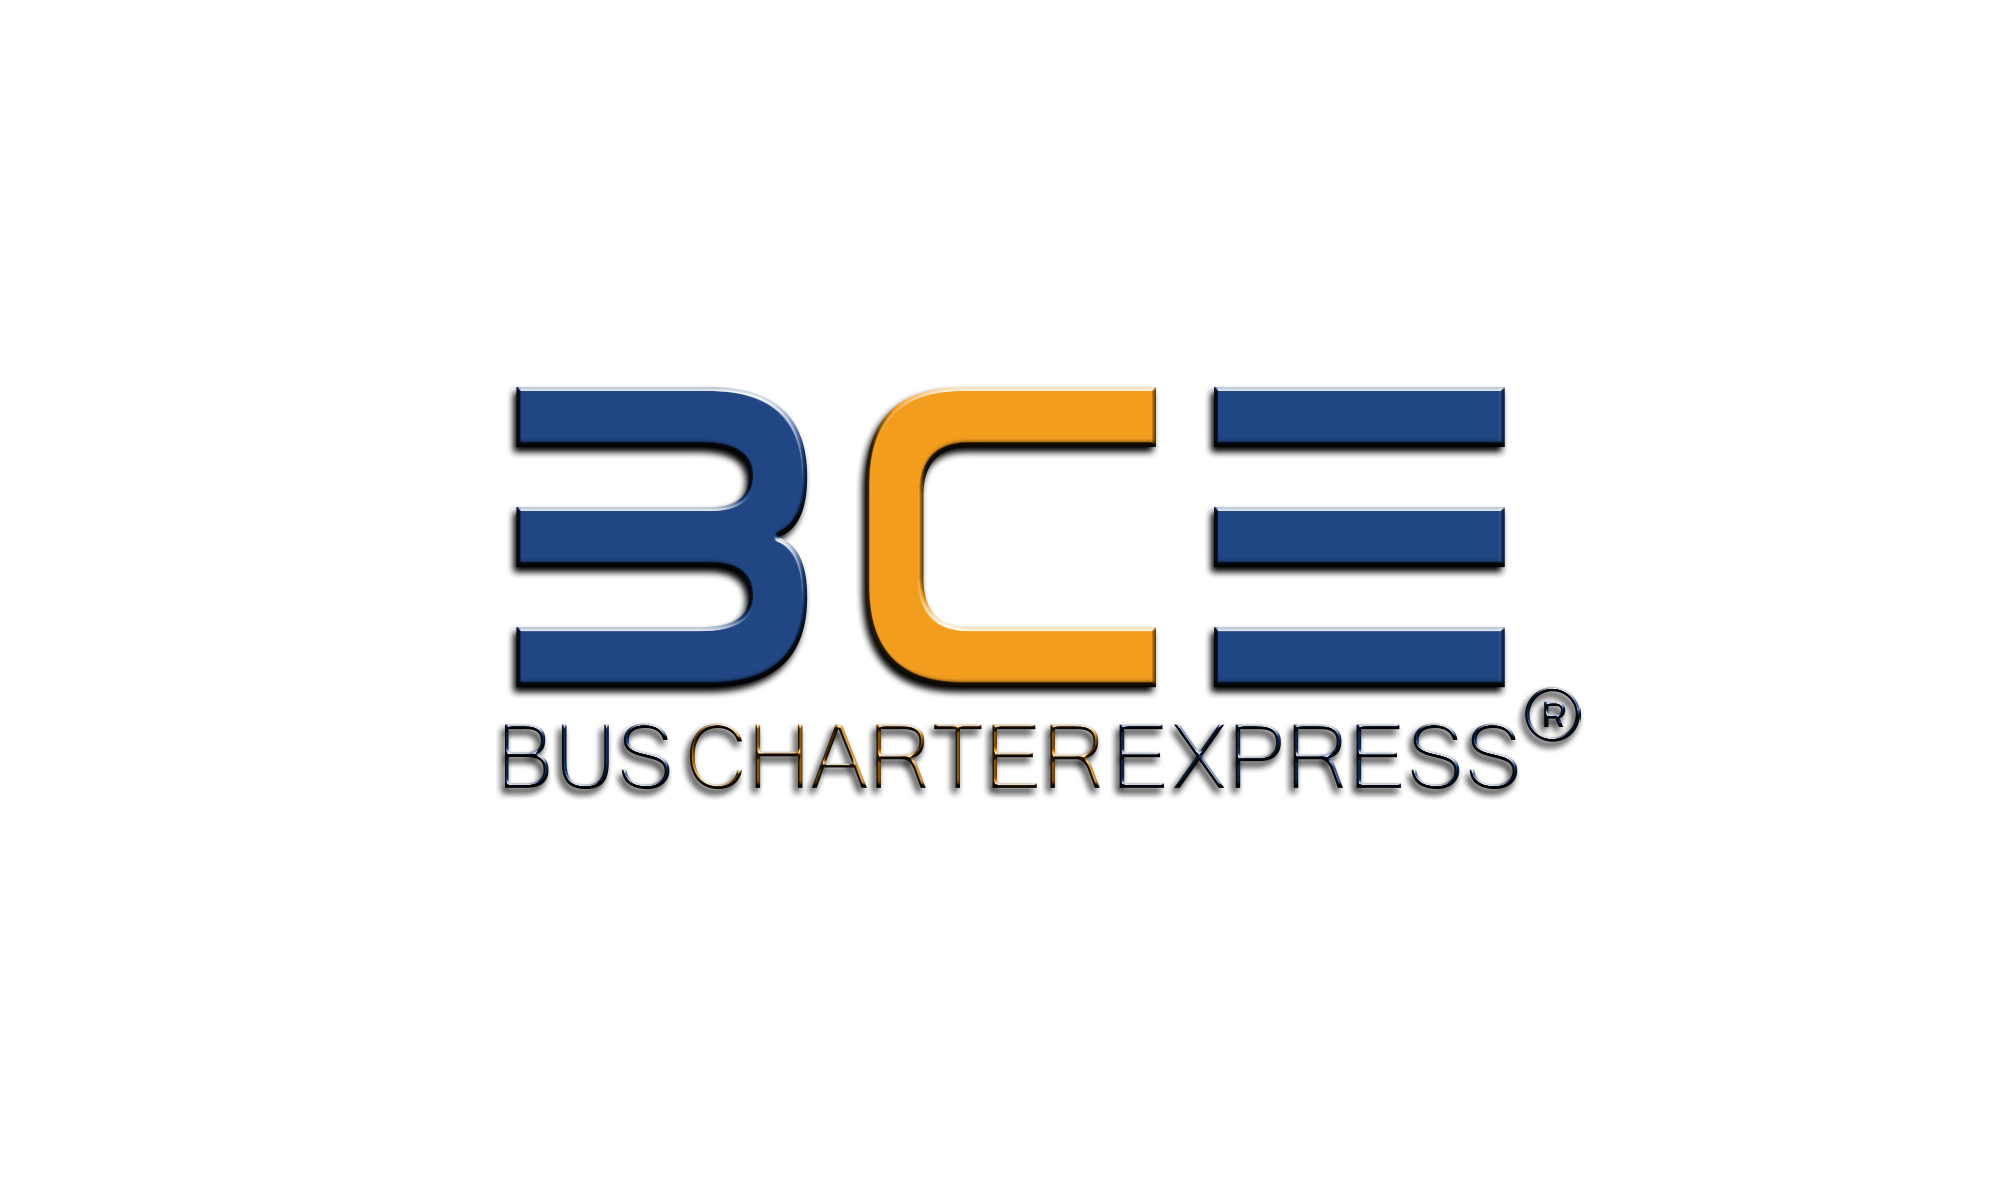 BCE_logo